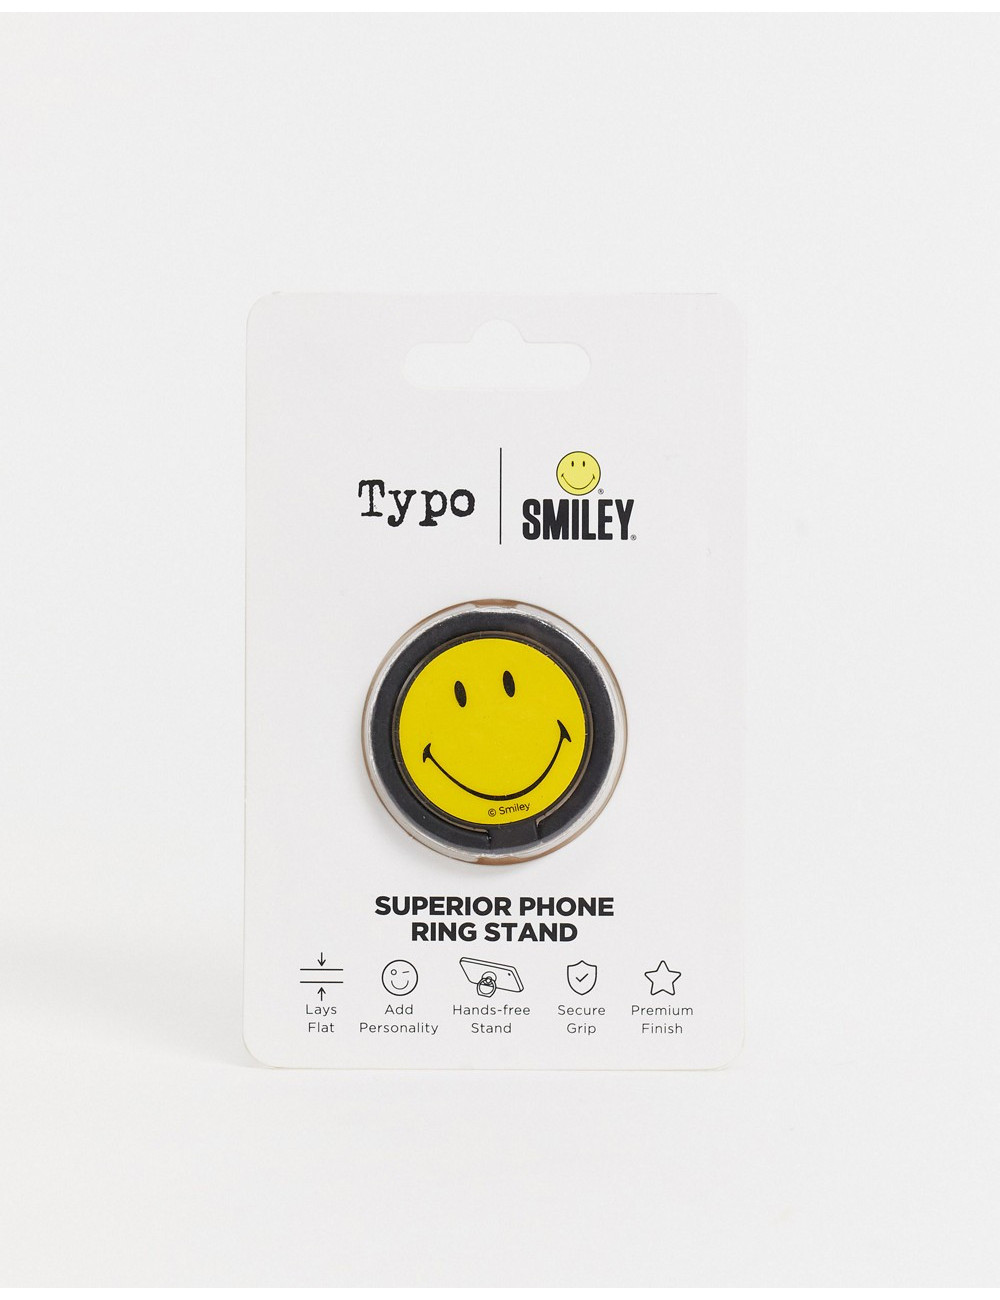 Typo x Smiley phone ring